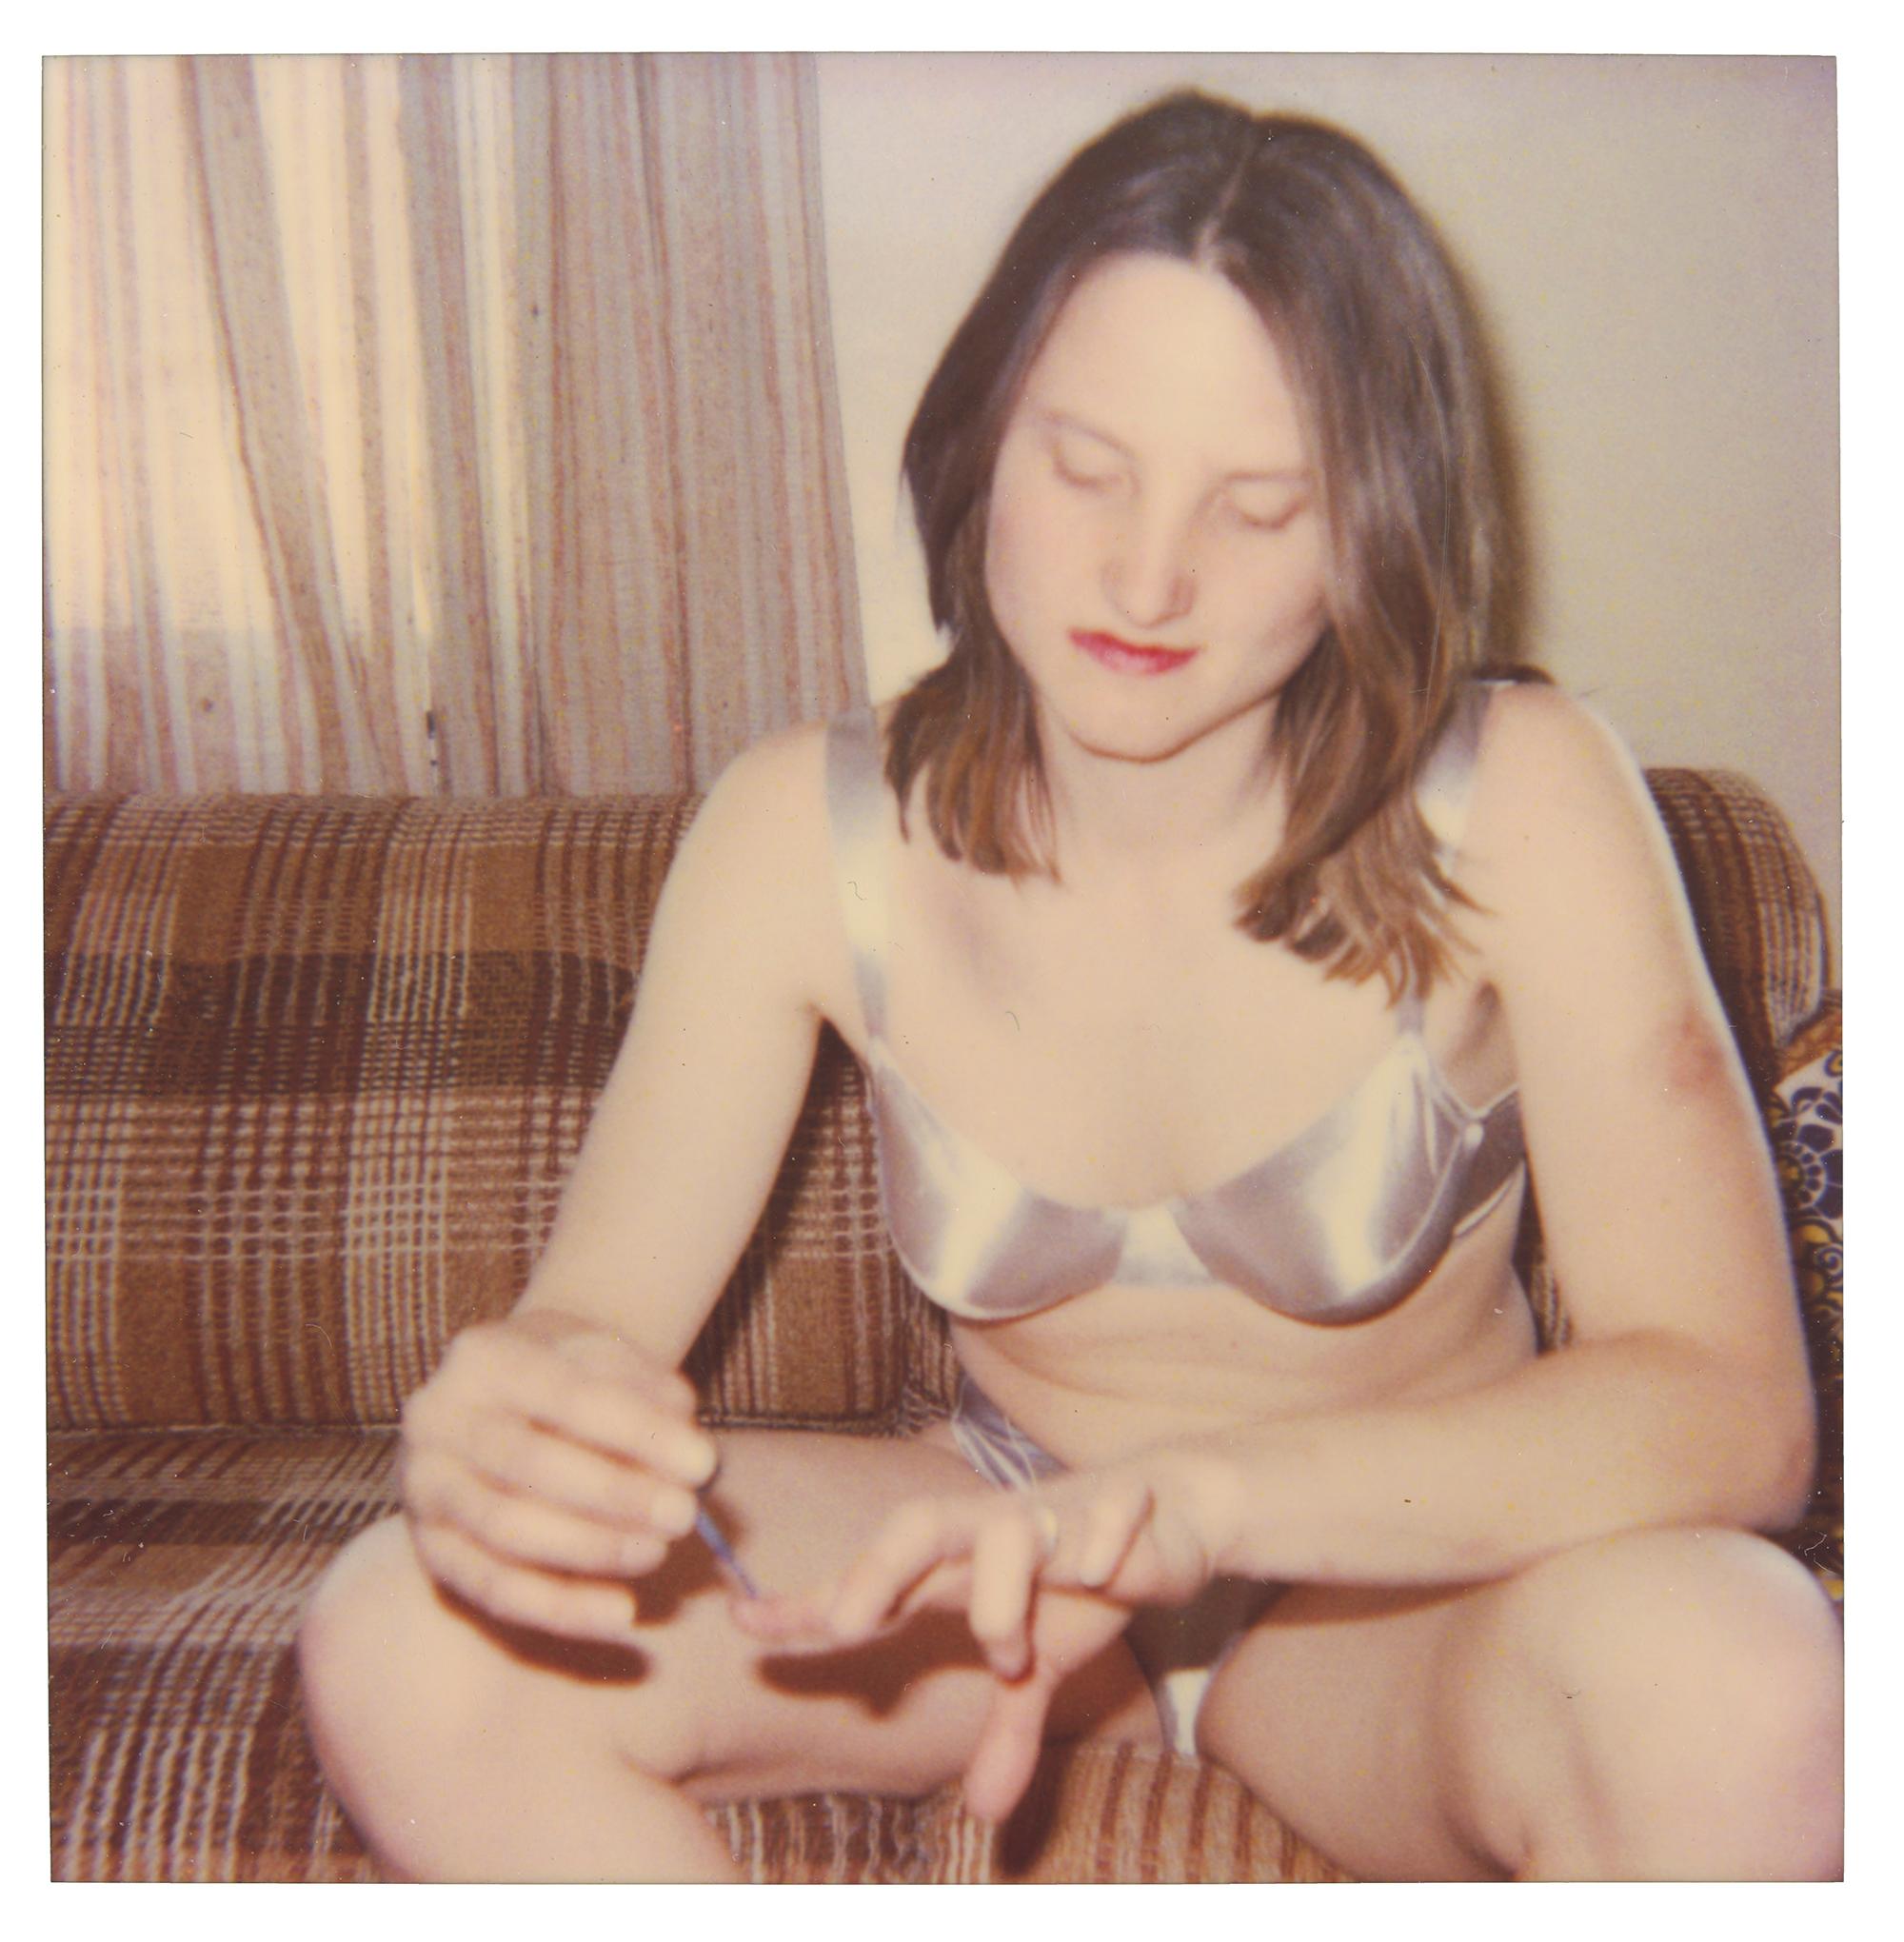 Stefanie Schneider Portrait Photograph - Kirsten doing her Nails - Figurative, Portrait, Polaroid, Photograph, expired